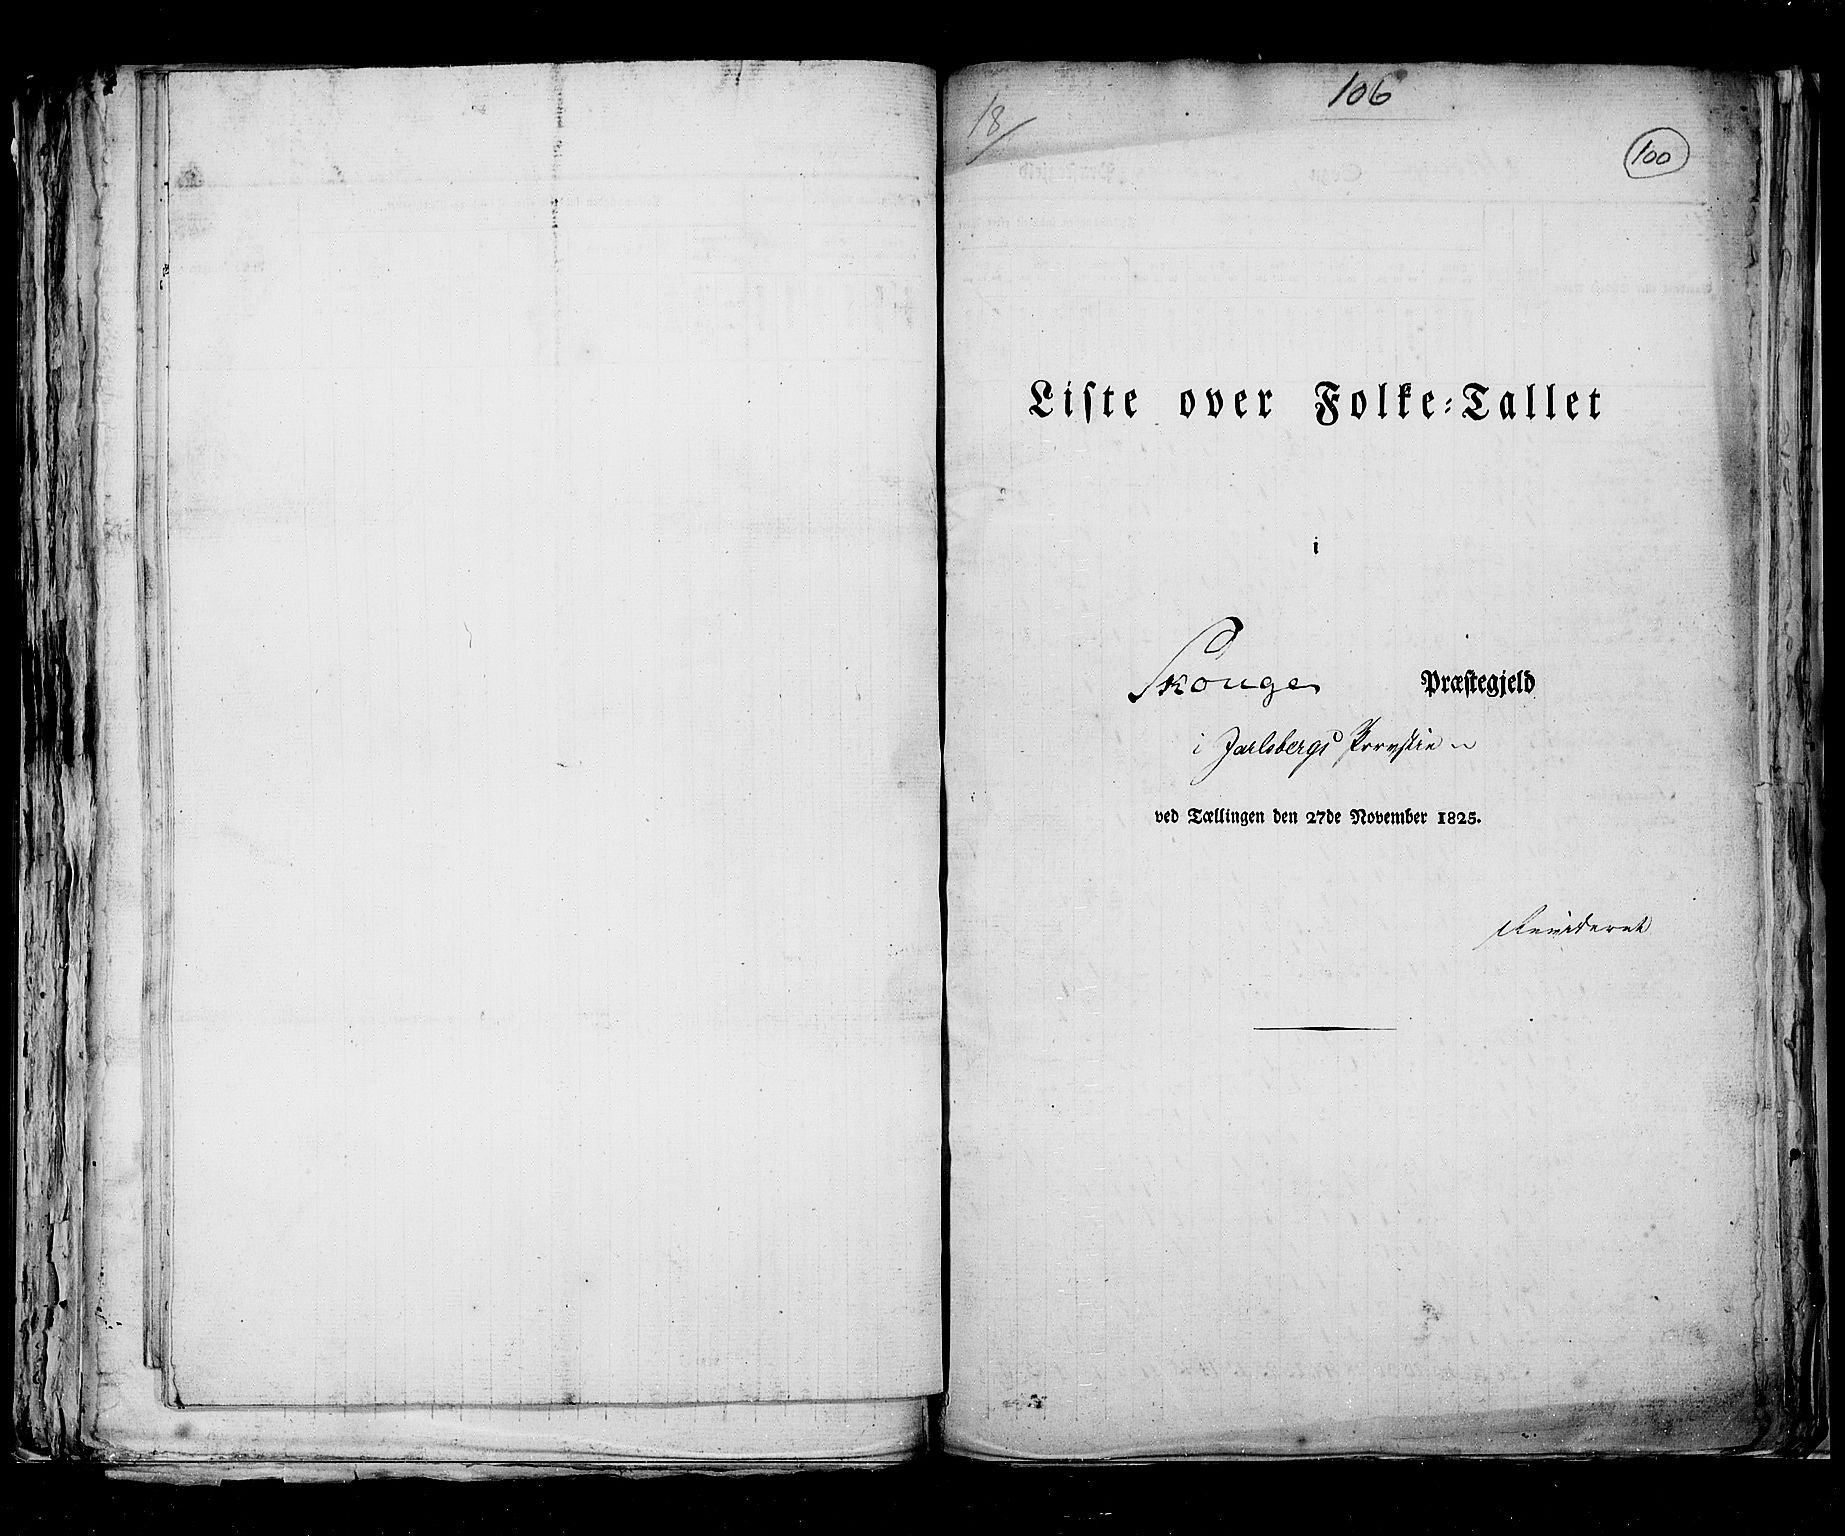 RA, Census 1825, vol. 8: Jarlsberg og Larvik amt, 1825, p. 100